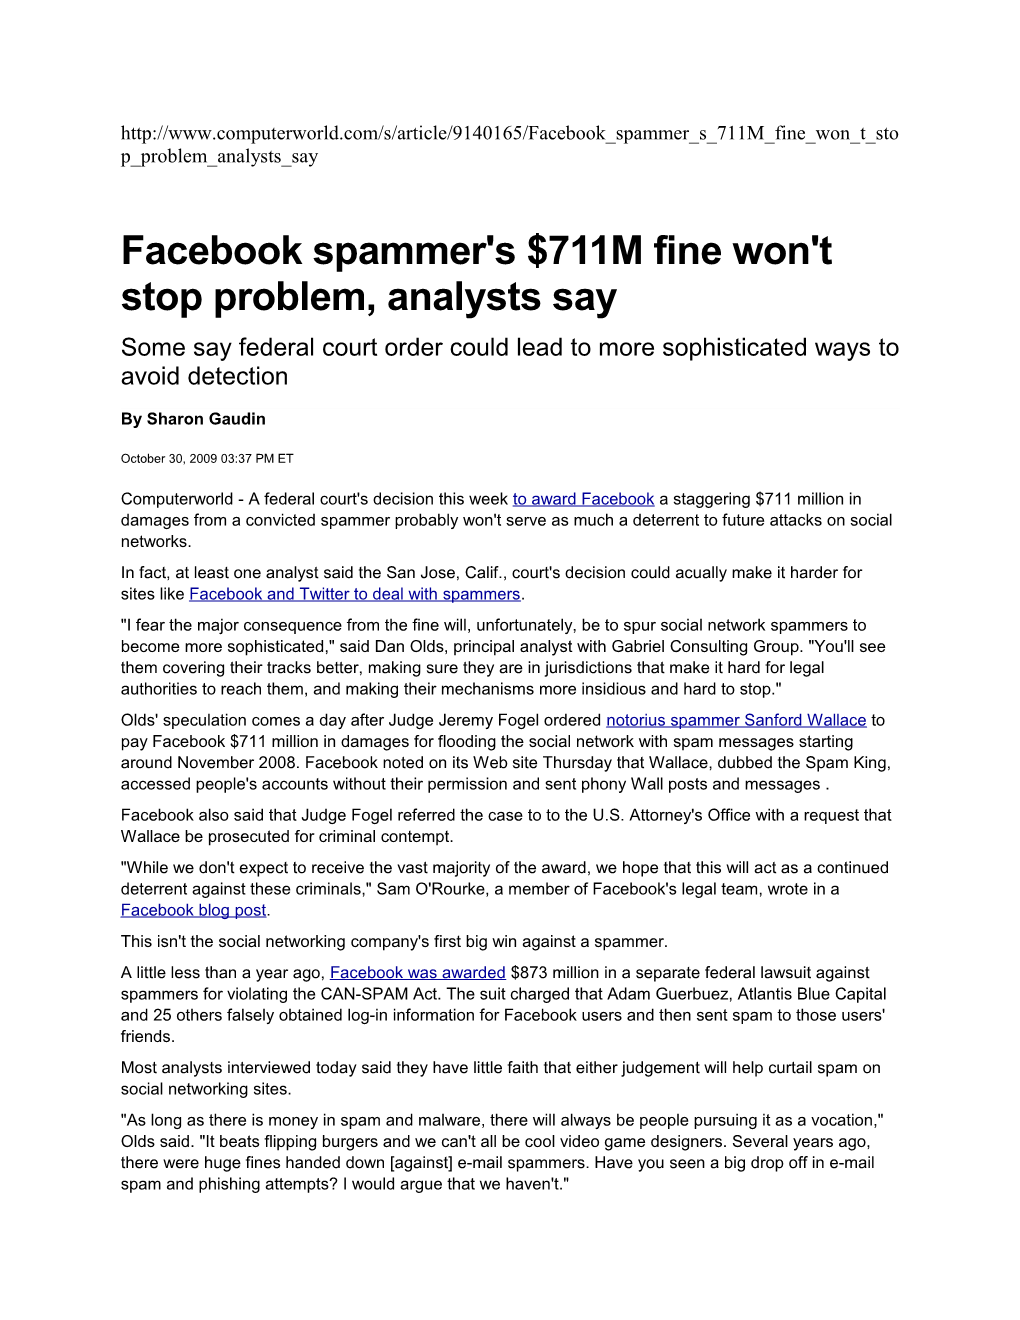 Facebook Spammer's $711M Fine Won't Stop Problem, Analysts Say (Computerworld)